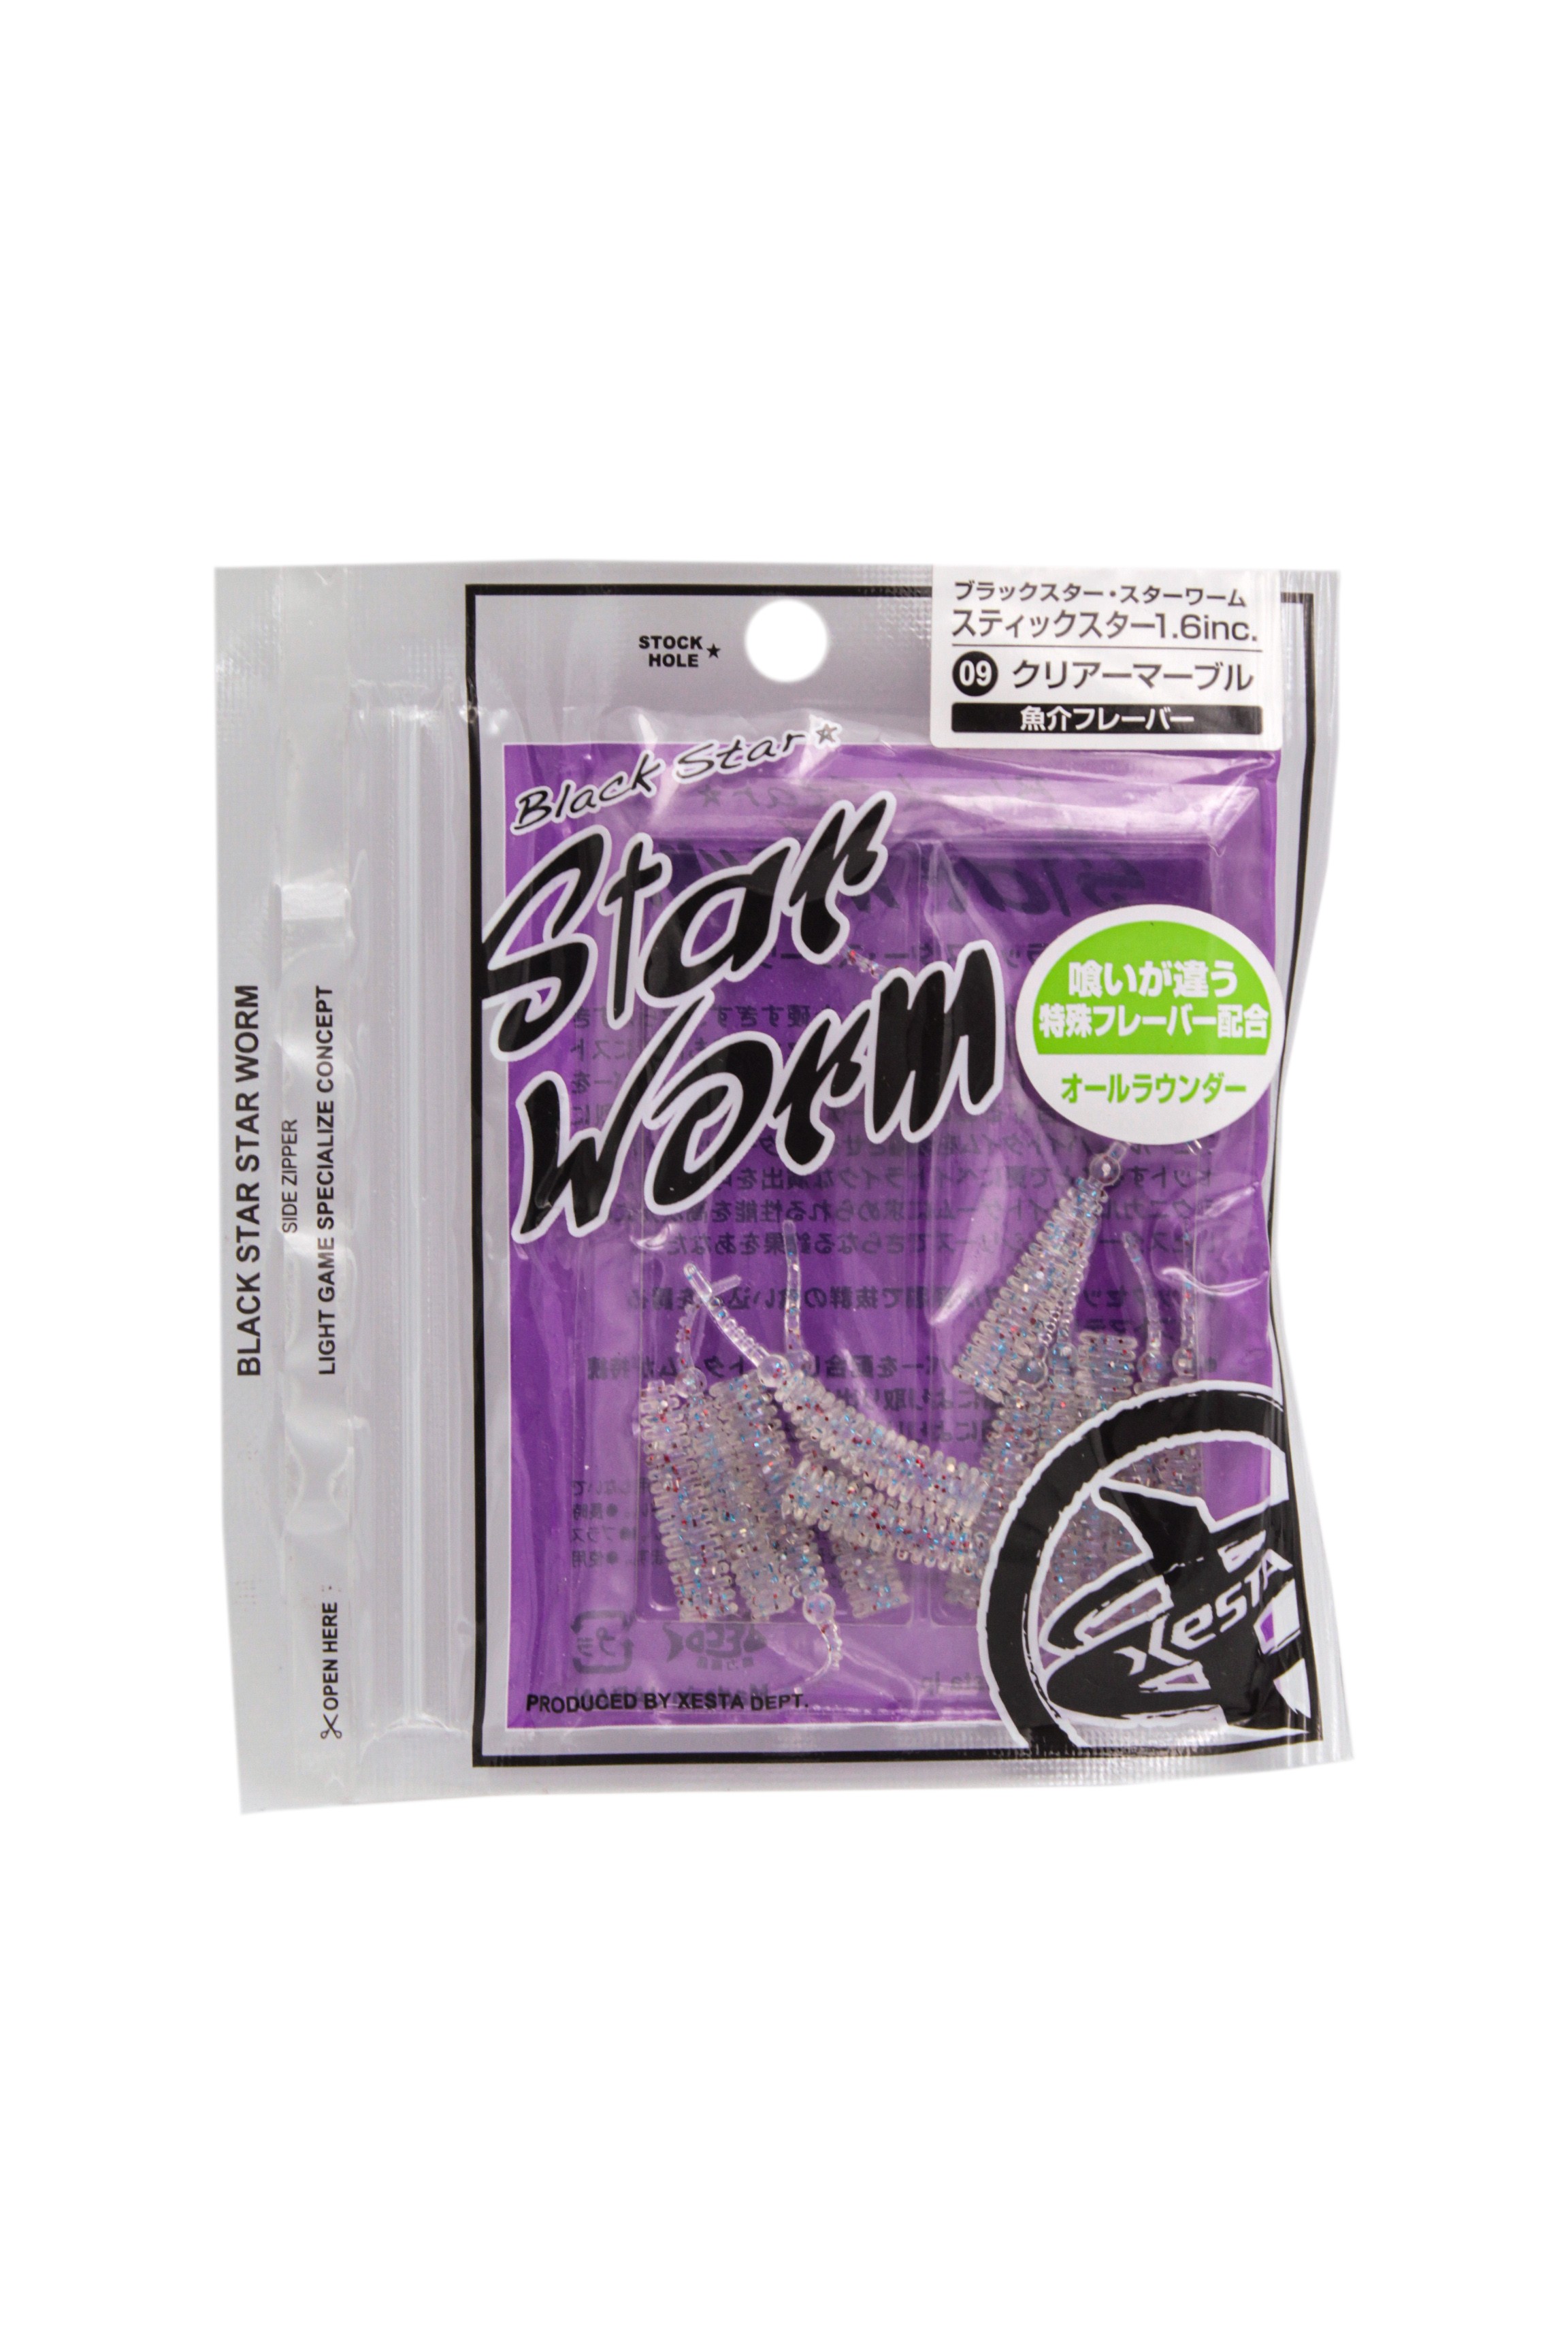 Приманка Xesta Black star worm stick star 1,6&quot; 09.cm - фото 1